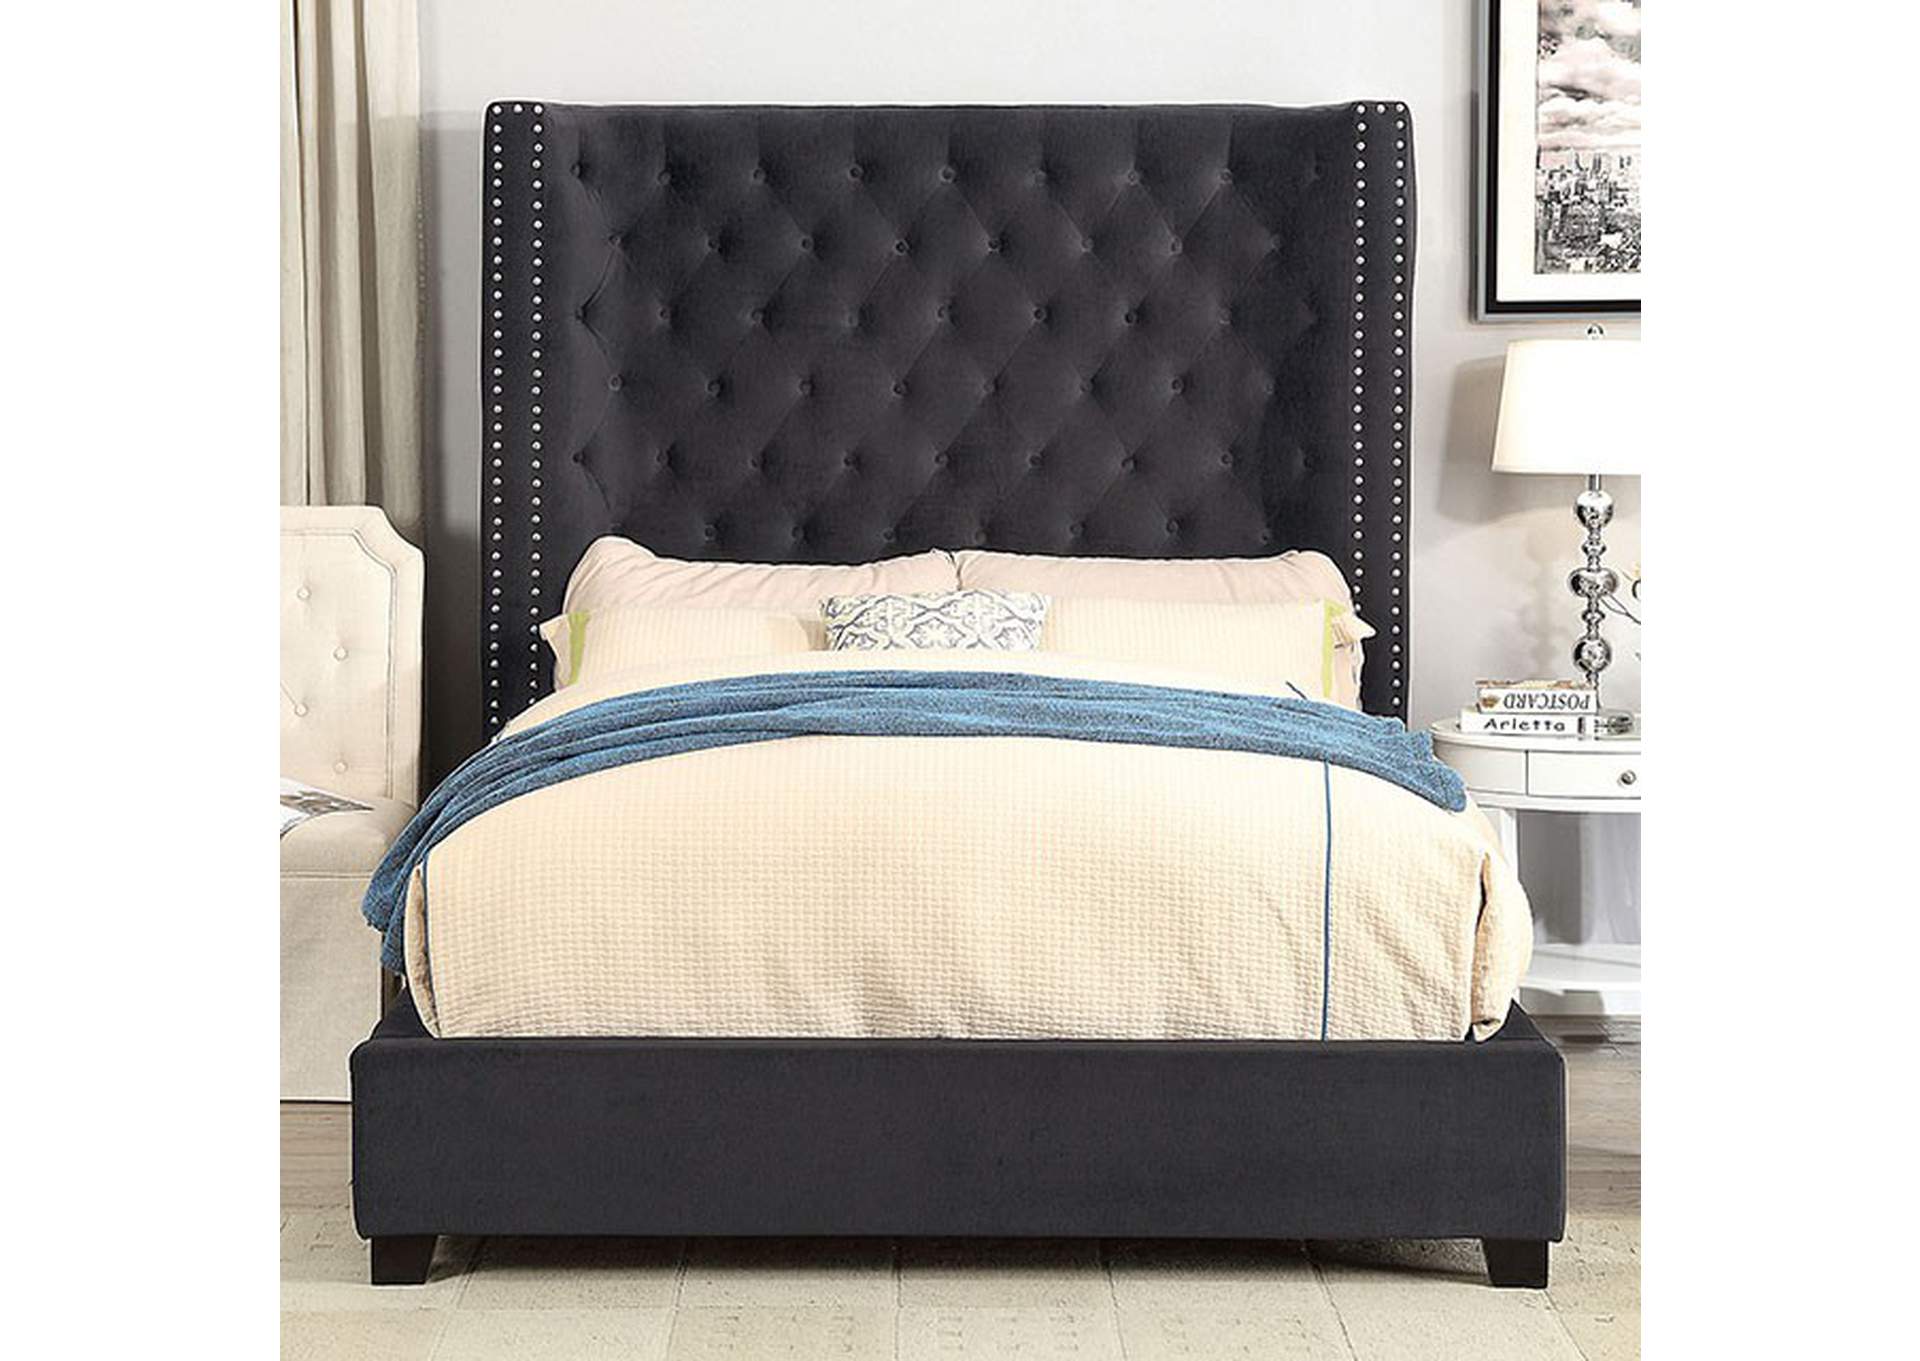 Mirabelle Black California King Bed,Furniture of America